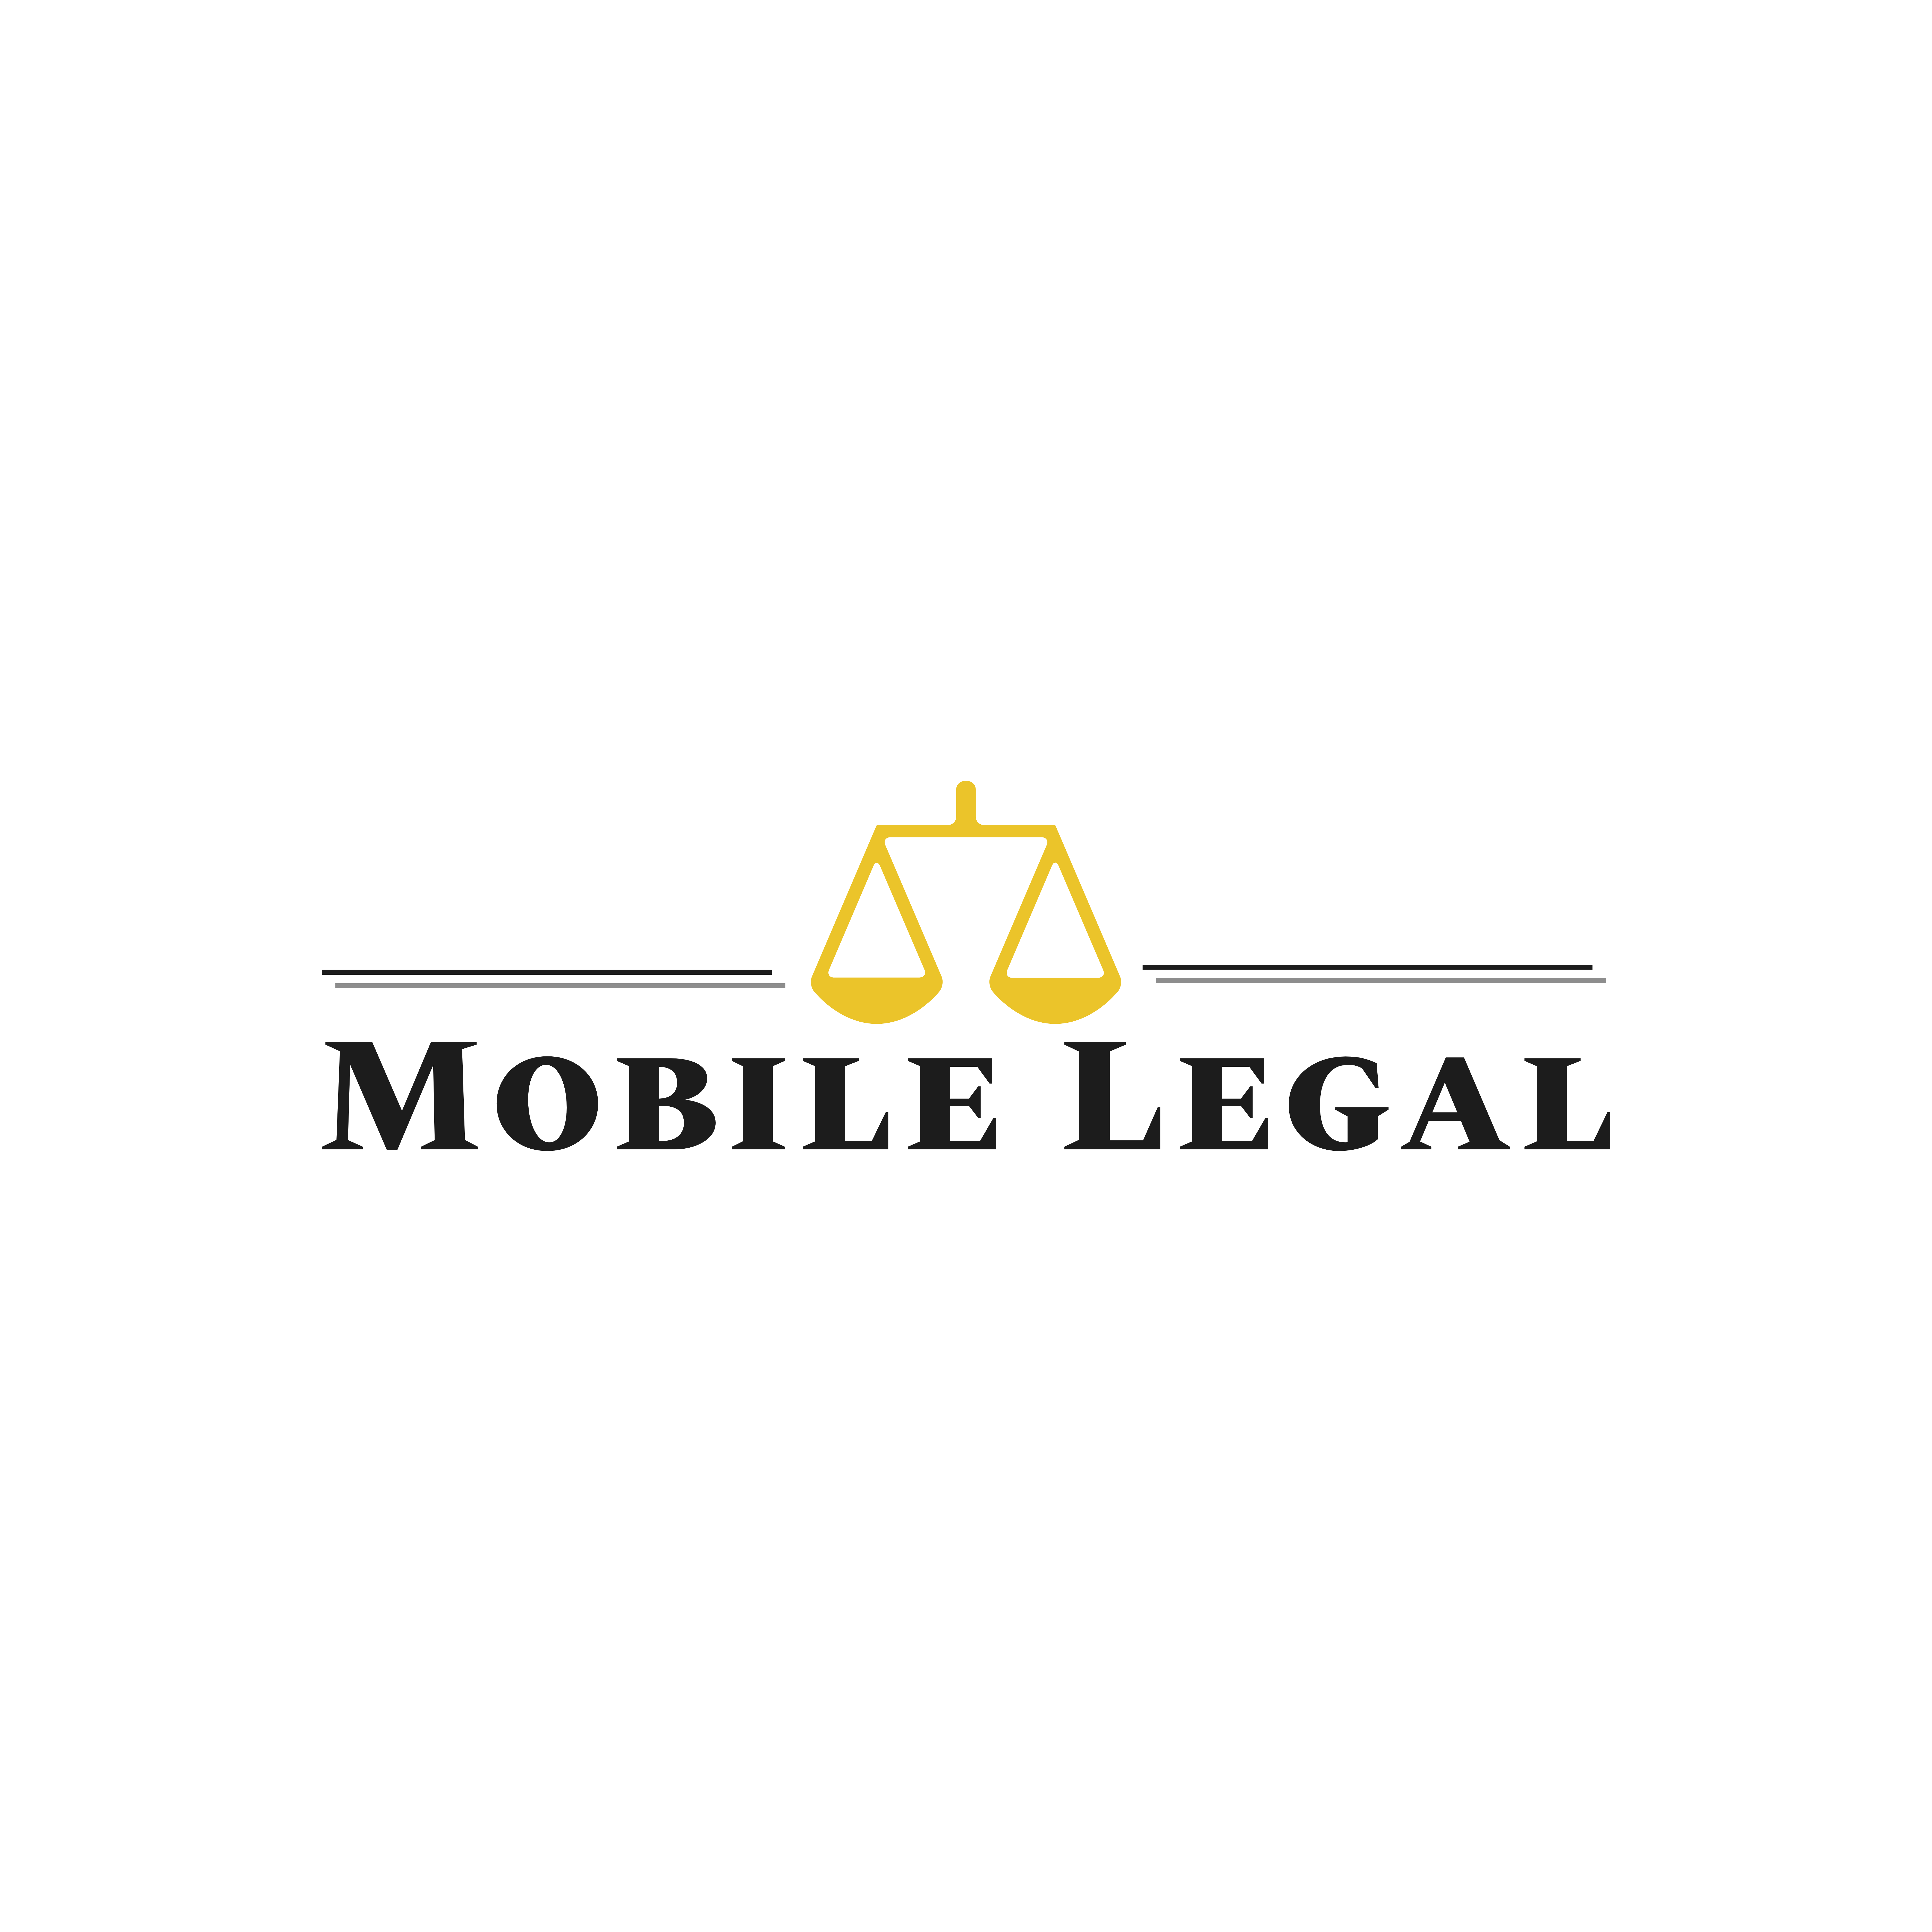 Mobile Legal